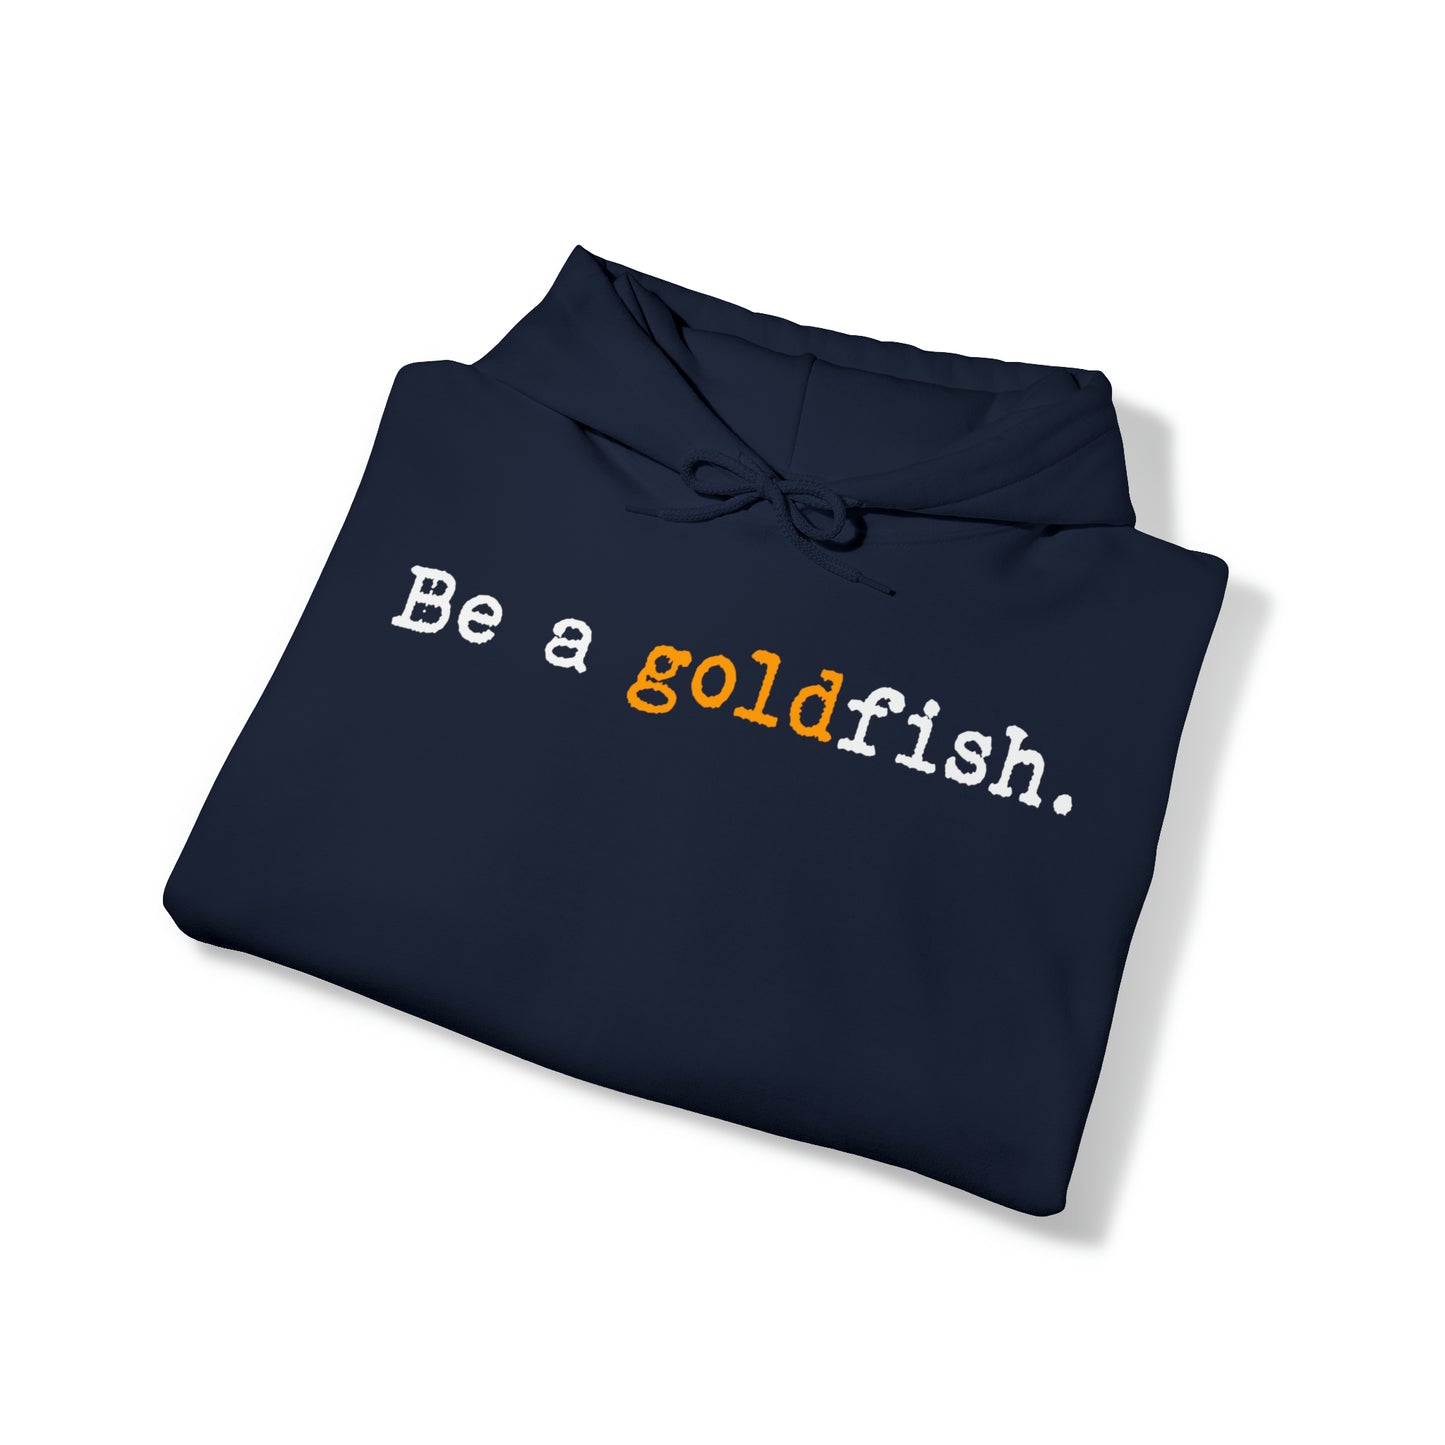 Be a Goldfish Navy Hoodie